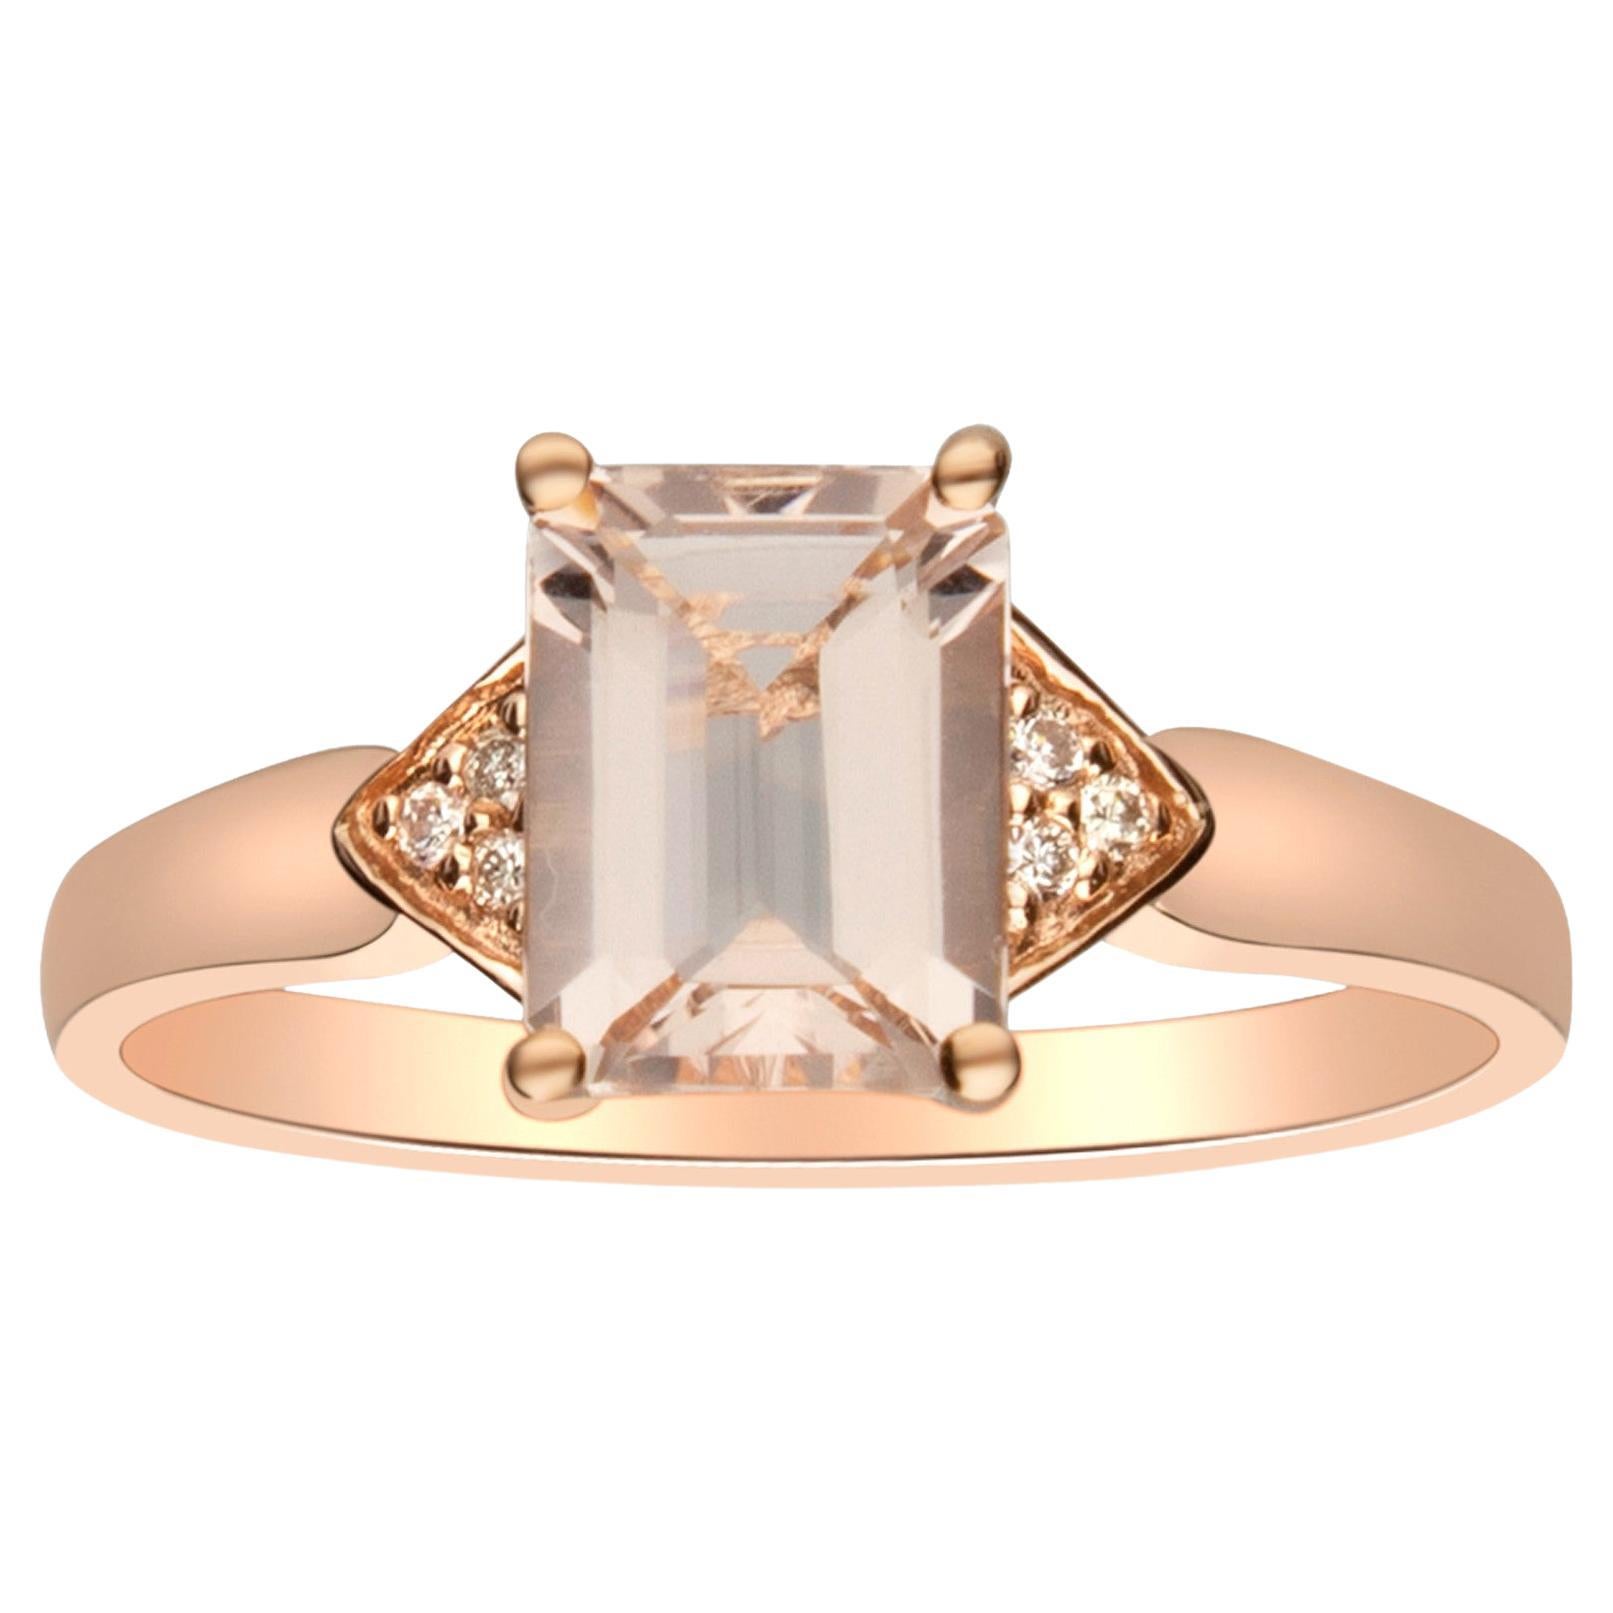 1.28 Carat Cushion-Cut Morganite Diamond Accents 14K Rose Gold Ring